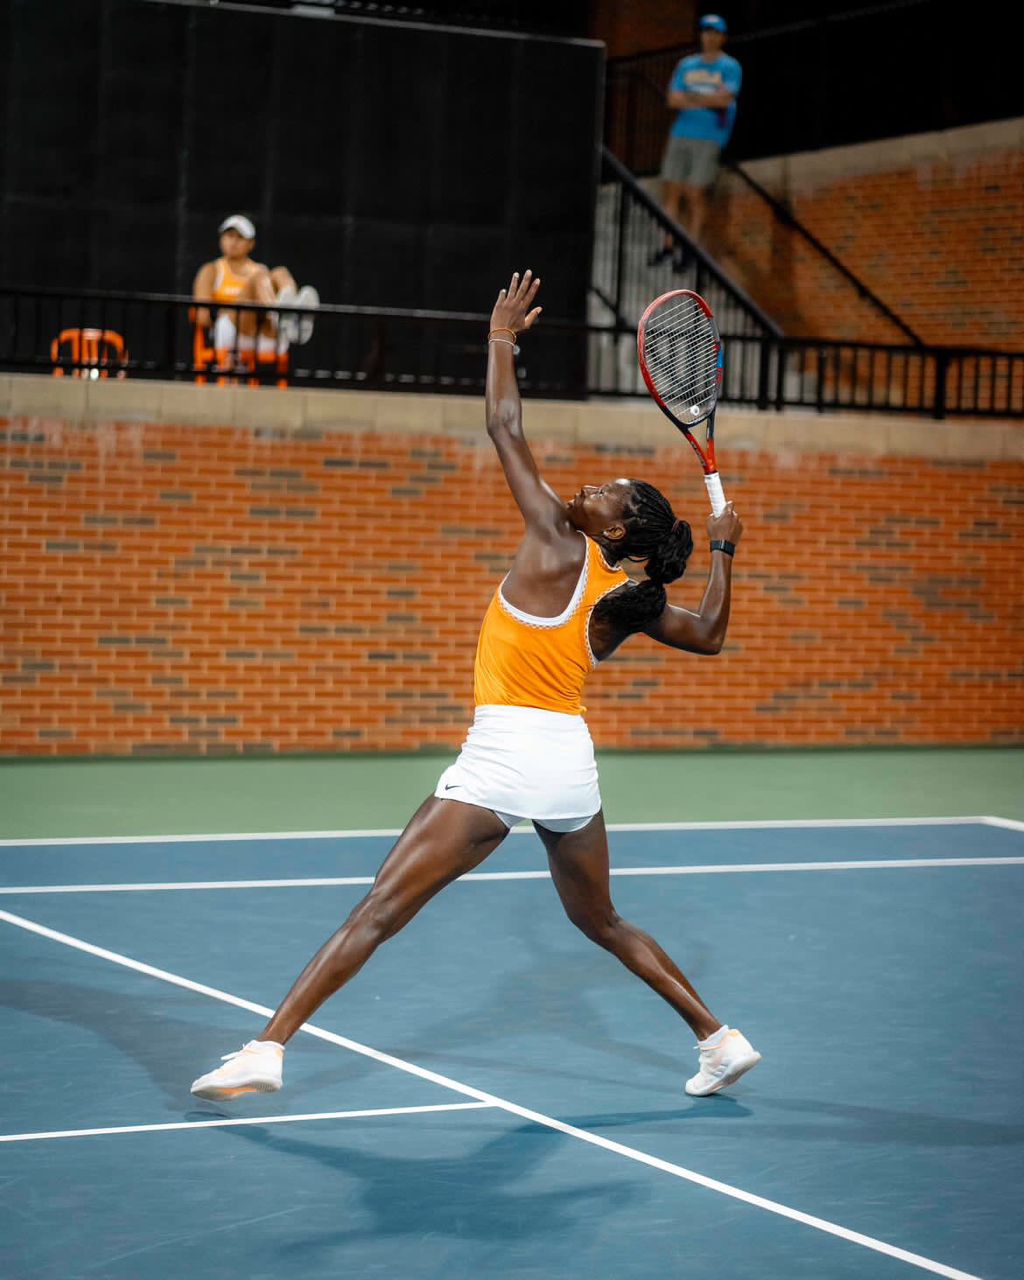 UK-born, US-trained; Esther Adesina Sets Sight On Grand Slams